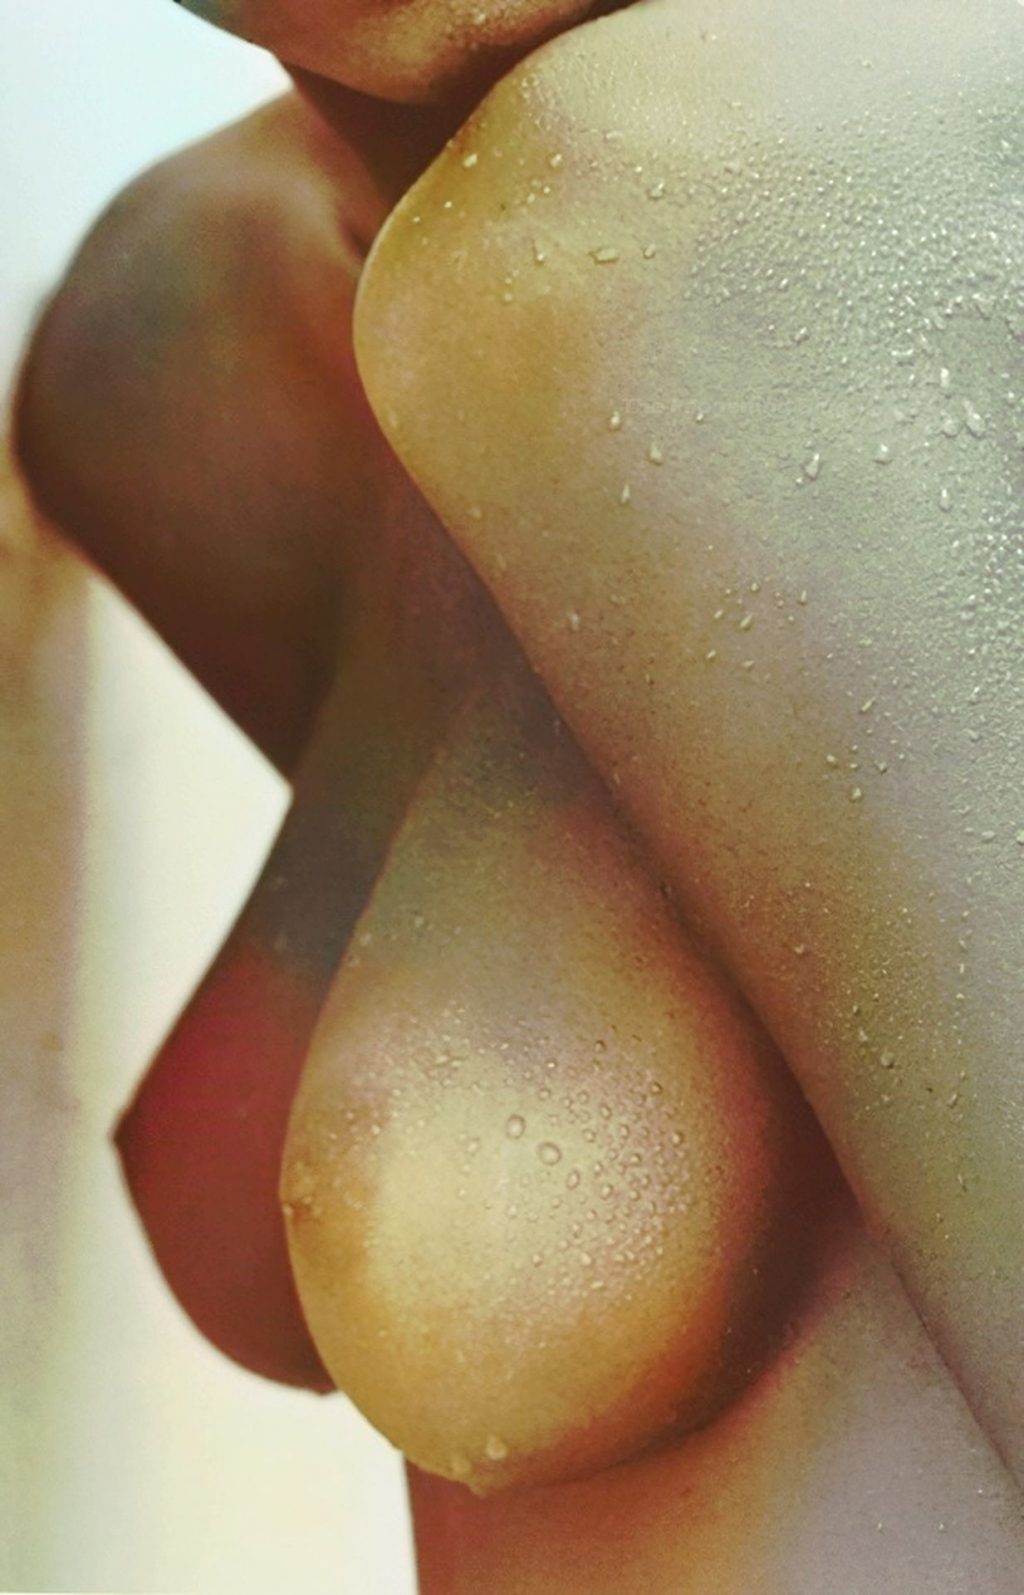 Stephanie Seymour Nude Ultimate Collection (80 Photos)